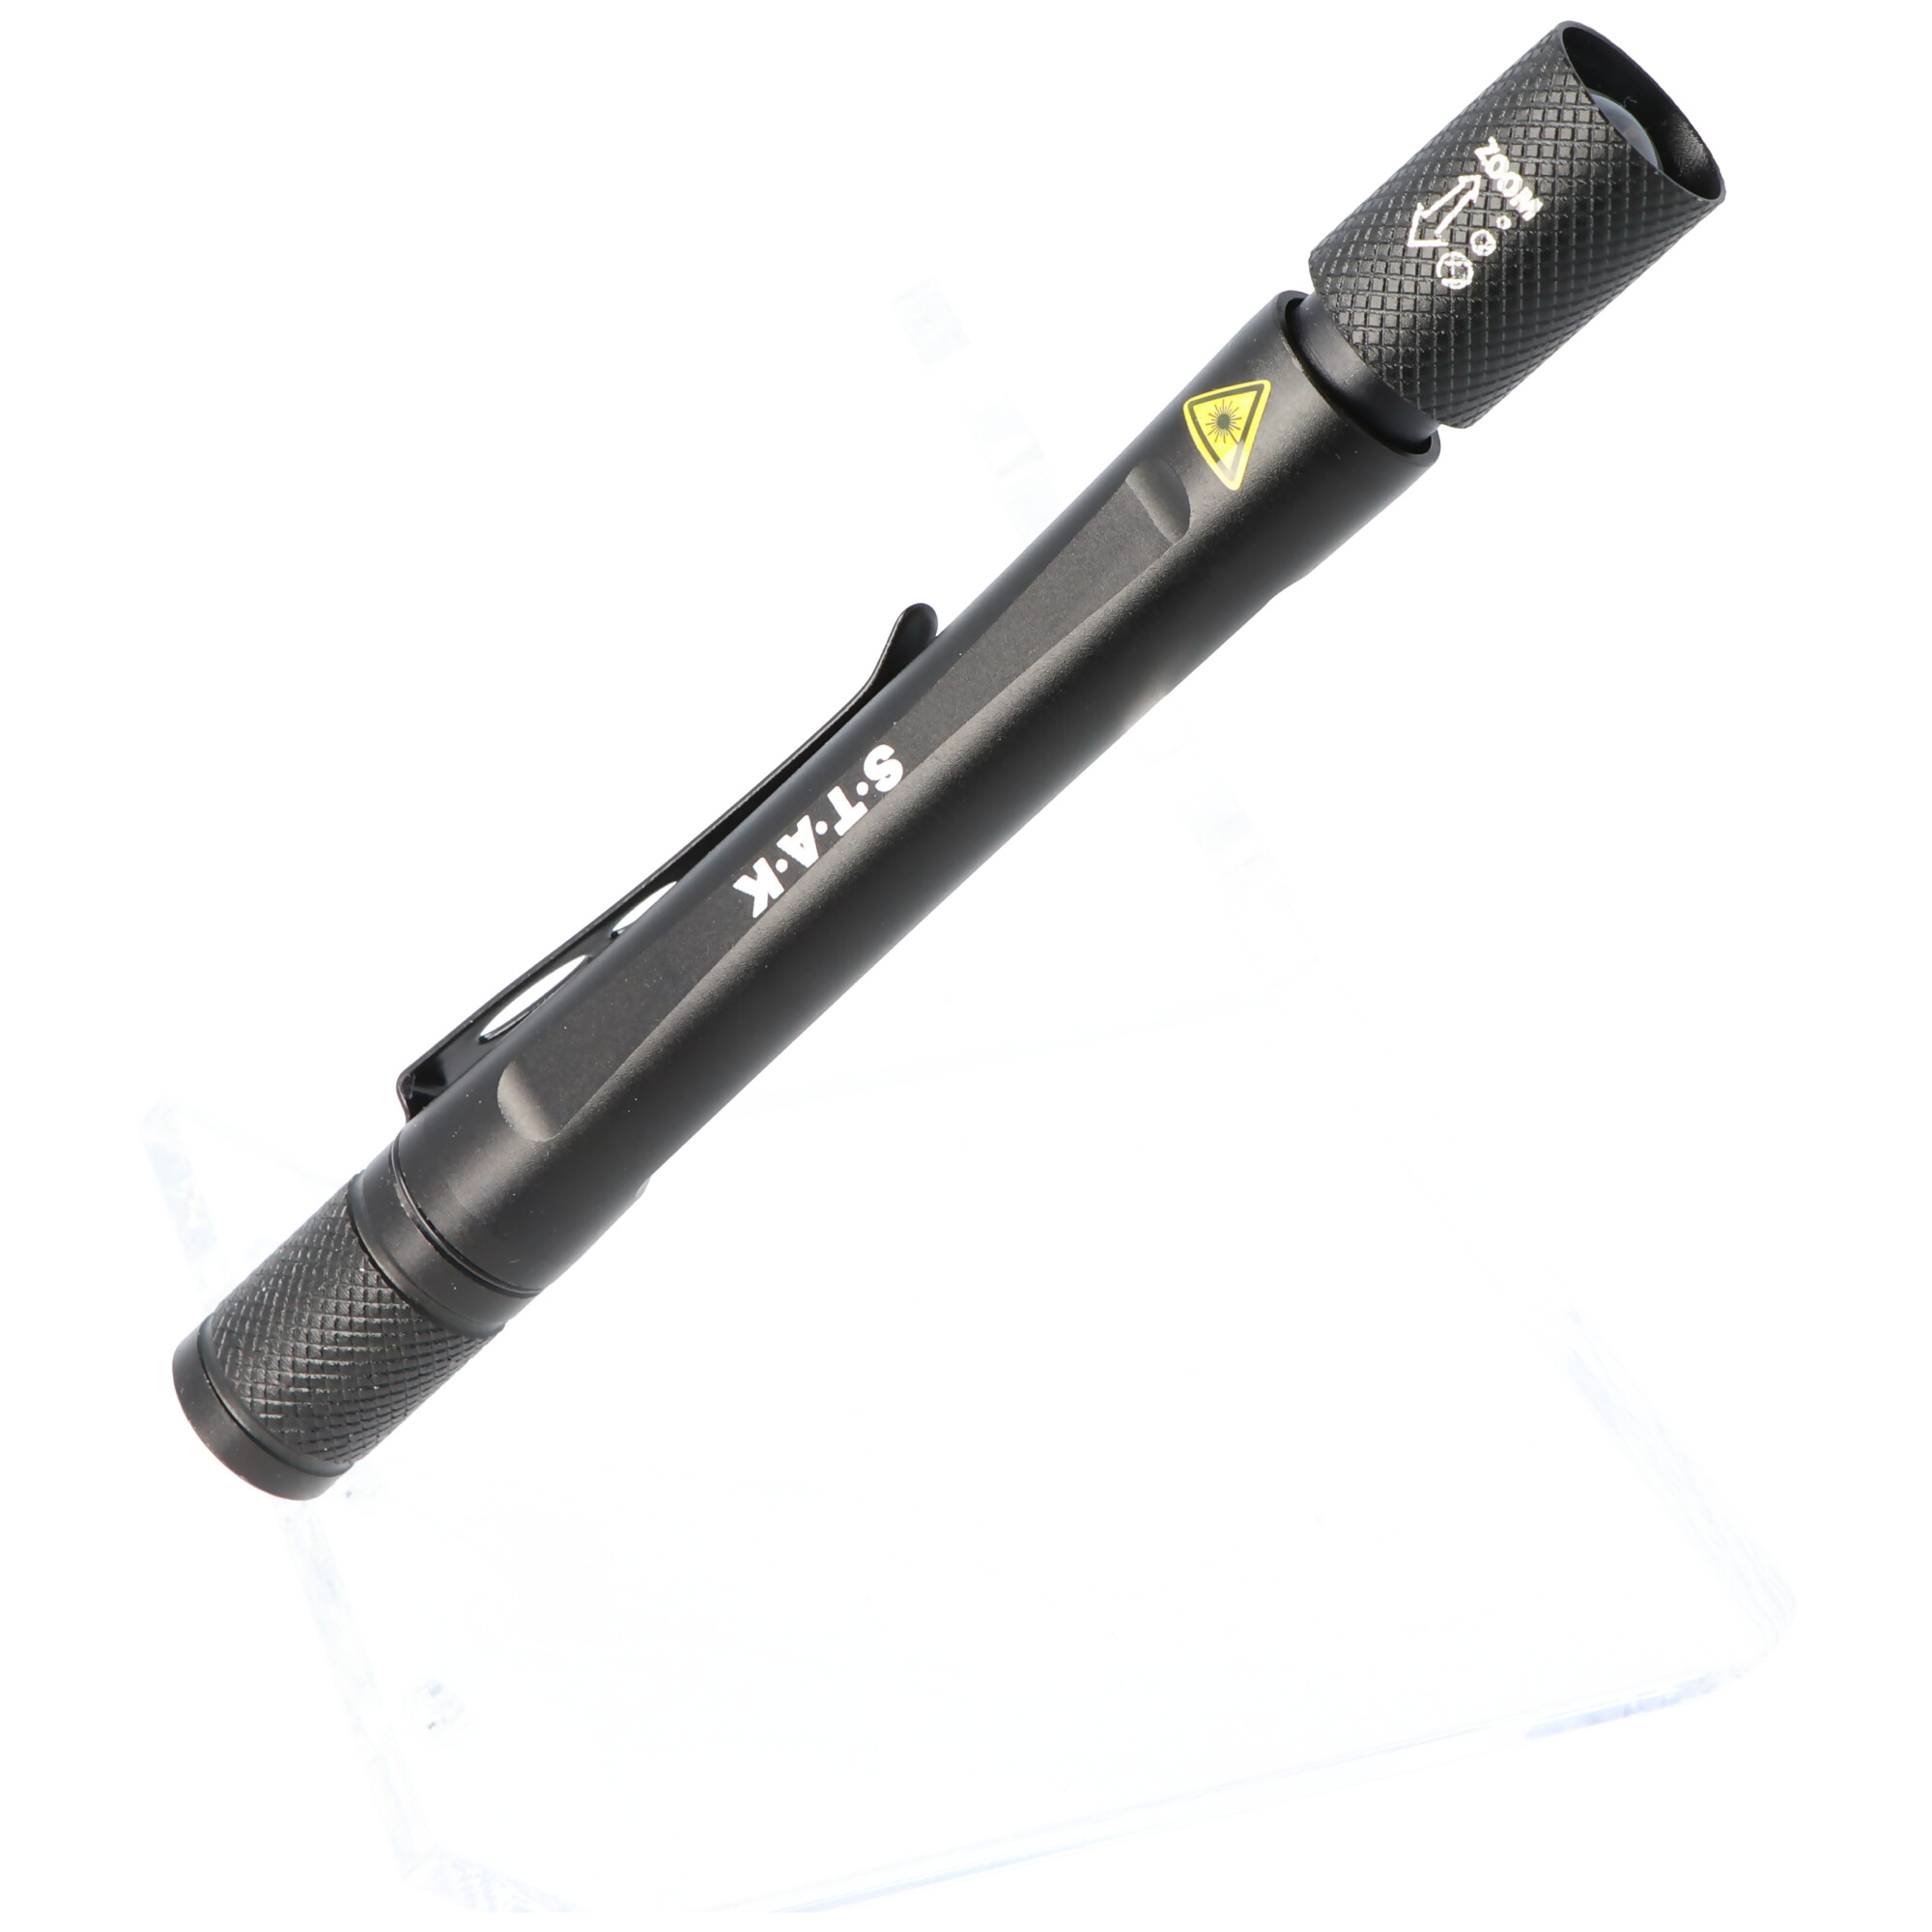 LED-Leuchtstift mit einer CREE XPG fokussierbar, max. 100 Lumen 5W inklusive 2 AAA Micro Alkaline Batterien